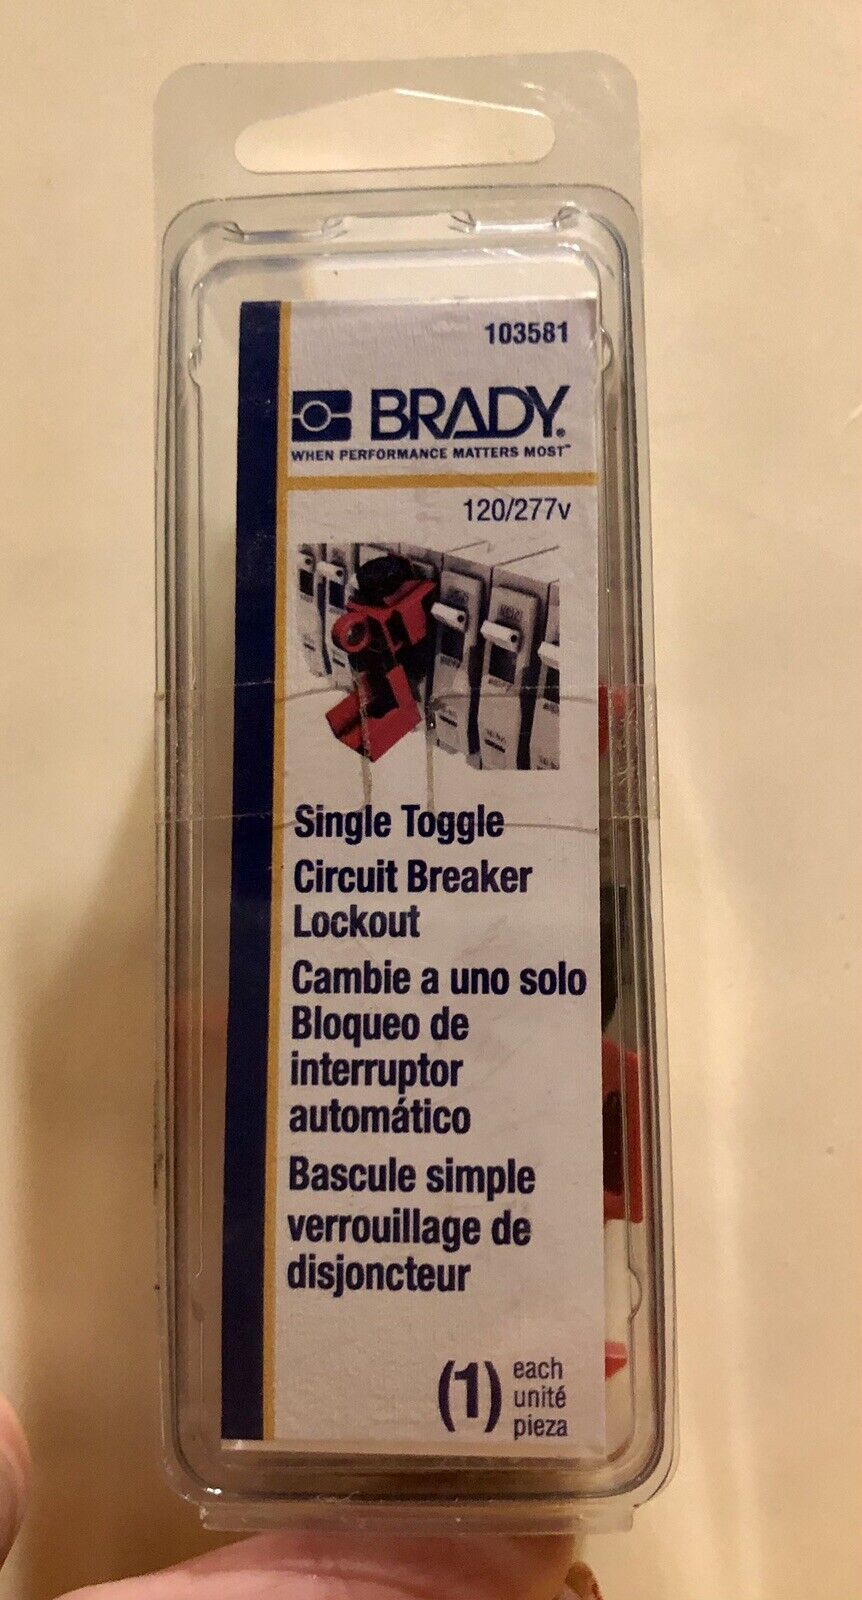 Brady Circuit Breaker Lockout Single Toggle 103581 120/277v